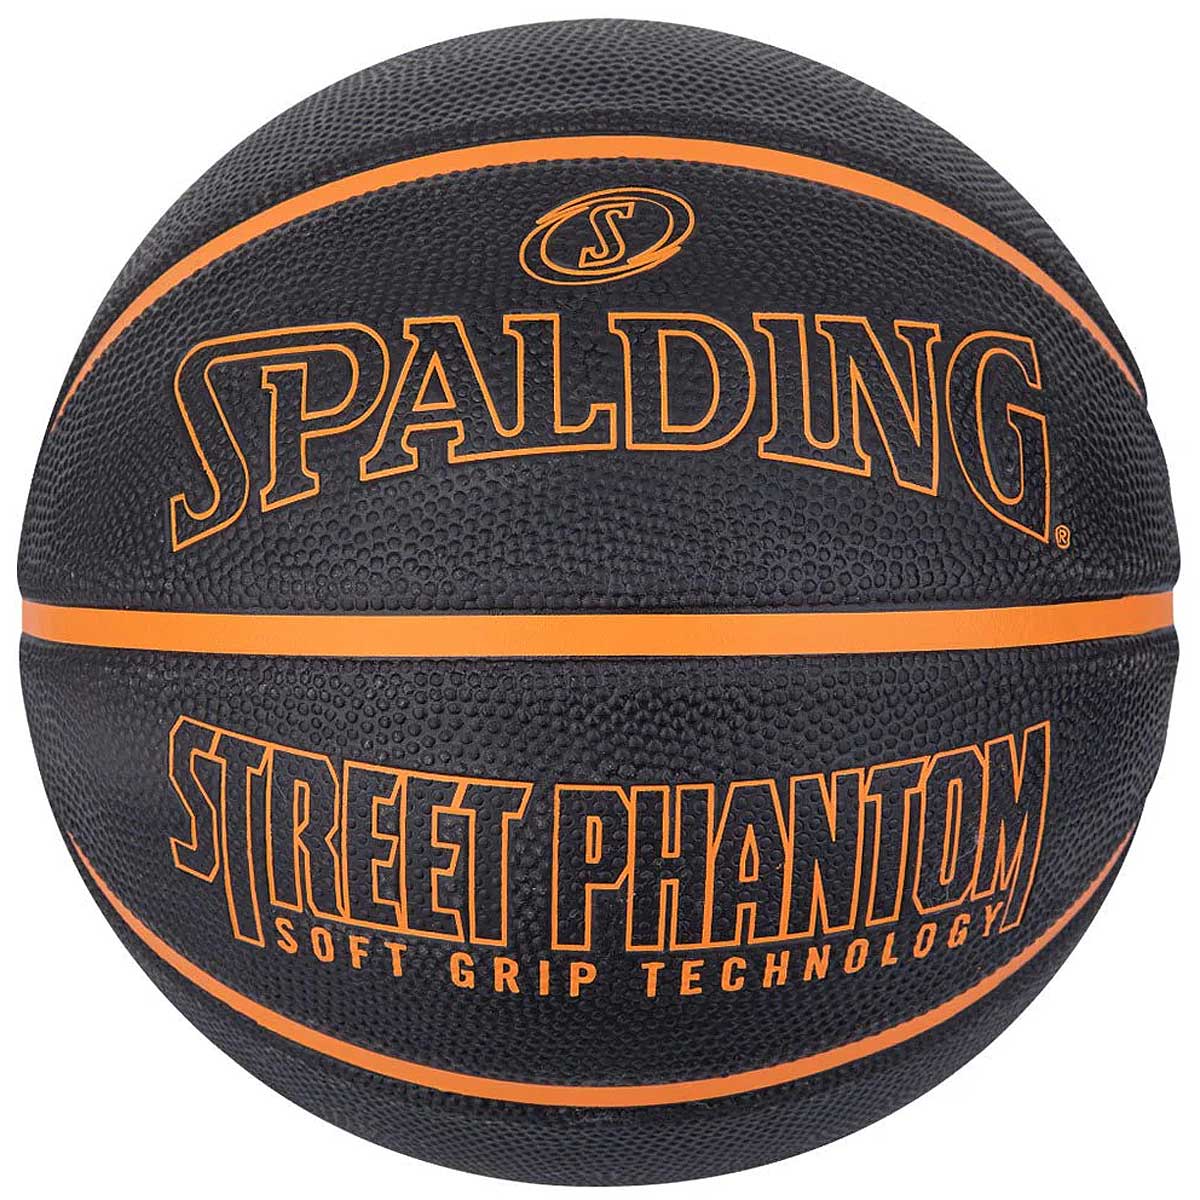 Image of Spalding Street Phantom Sgt Rubber Basketball, Black/orange